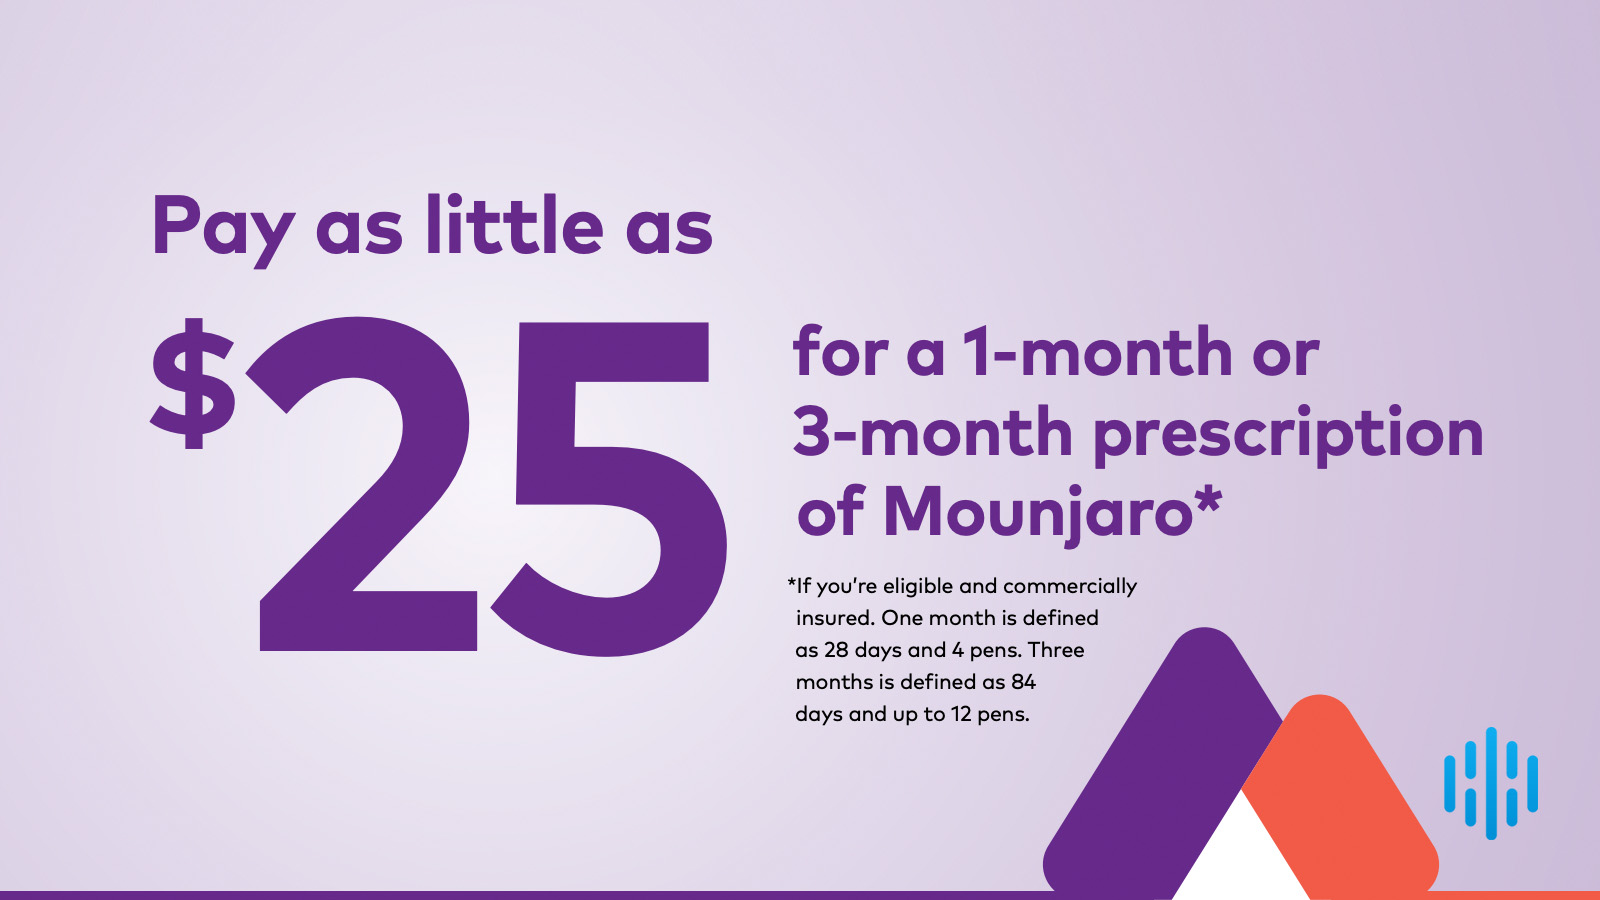 Instructions for using the Mounjaro Savings Card Handbook Health